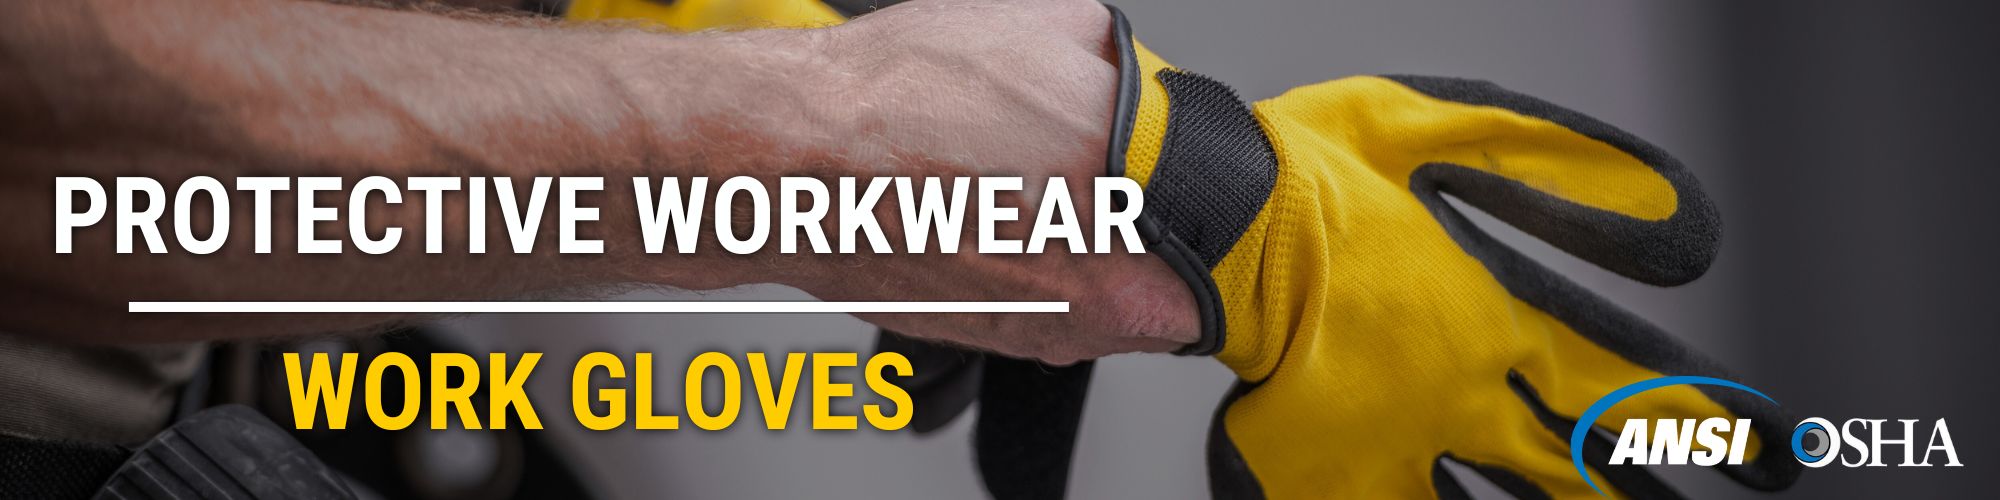 protective workwear safety work gloves